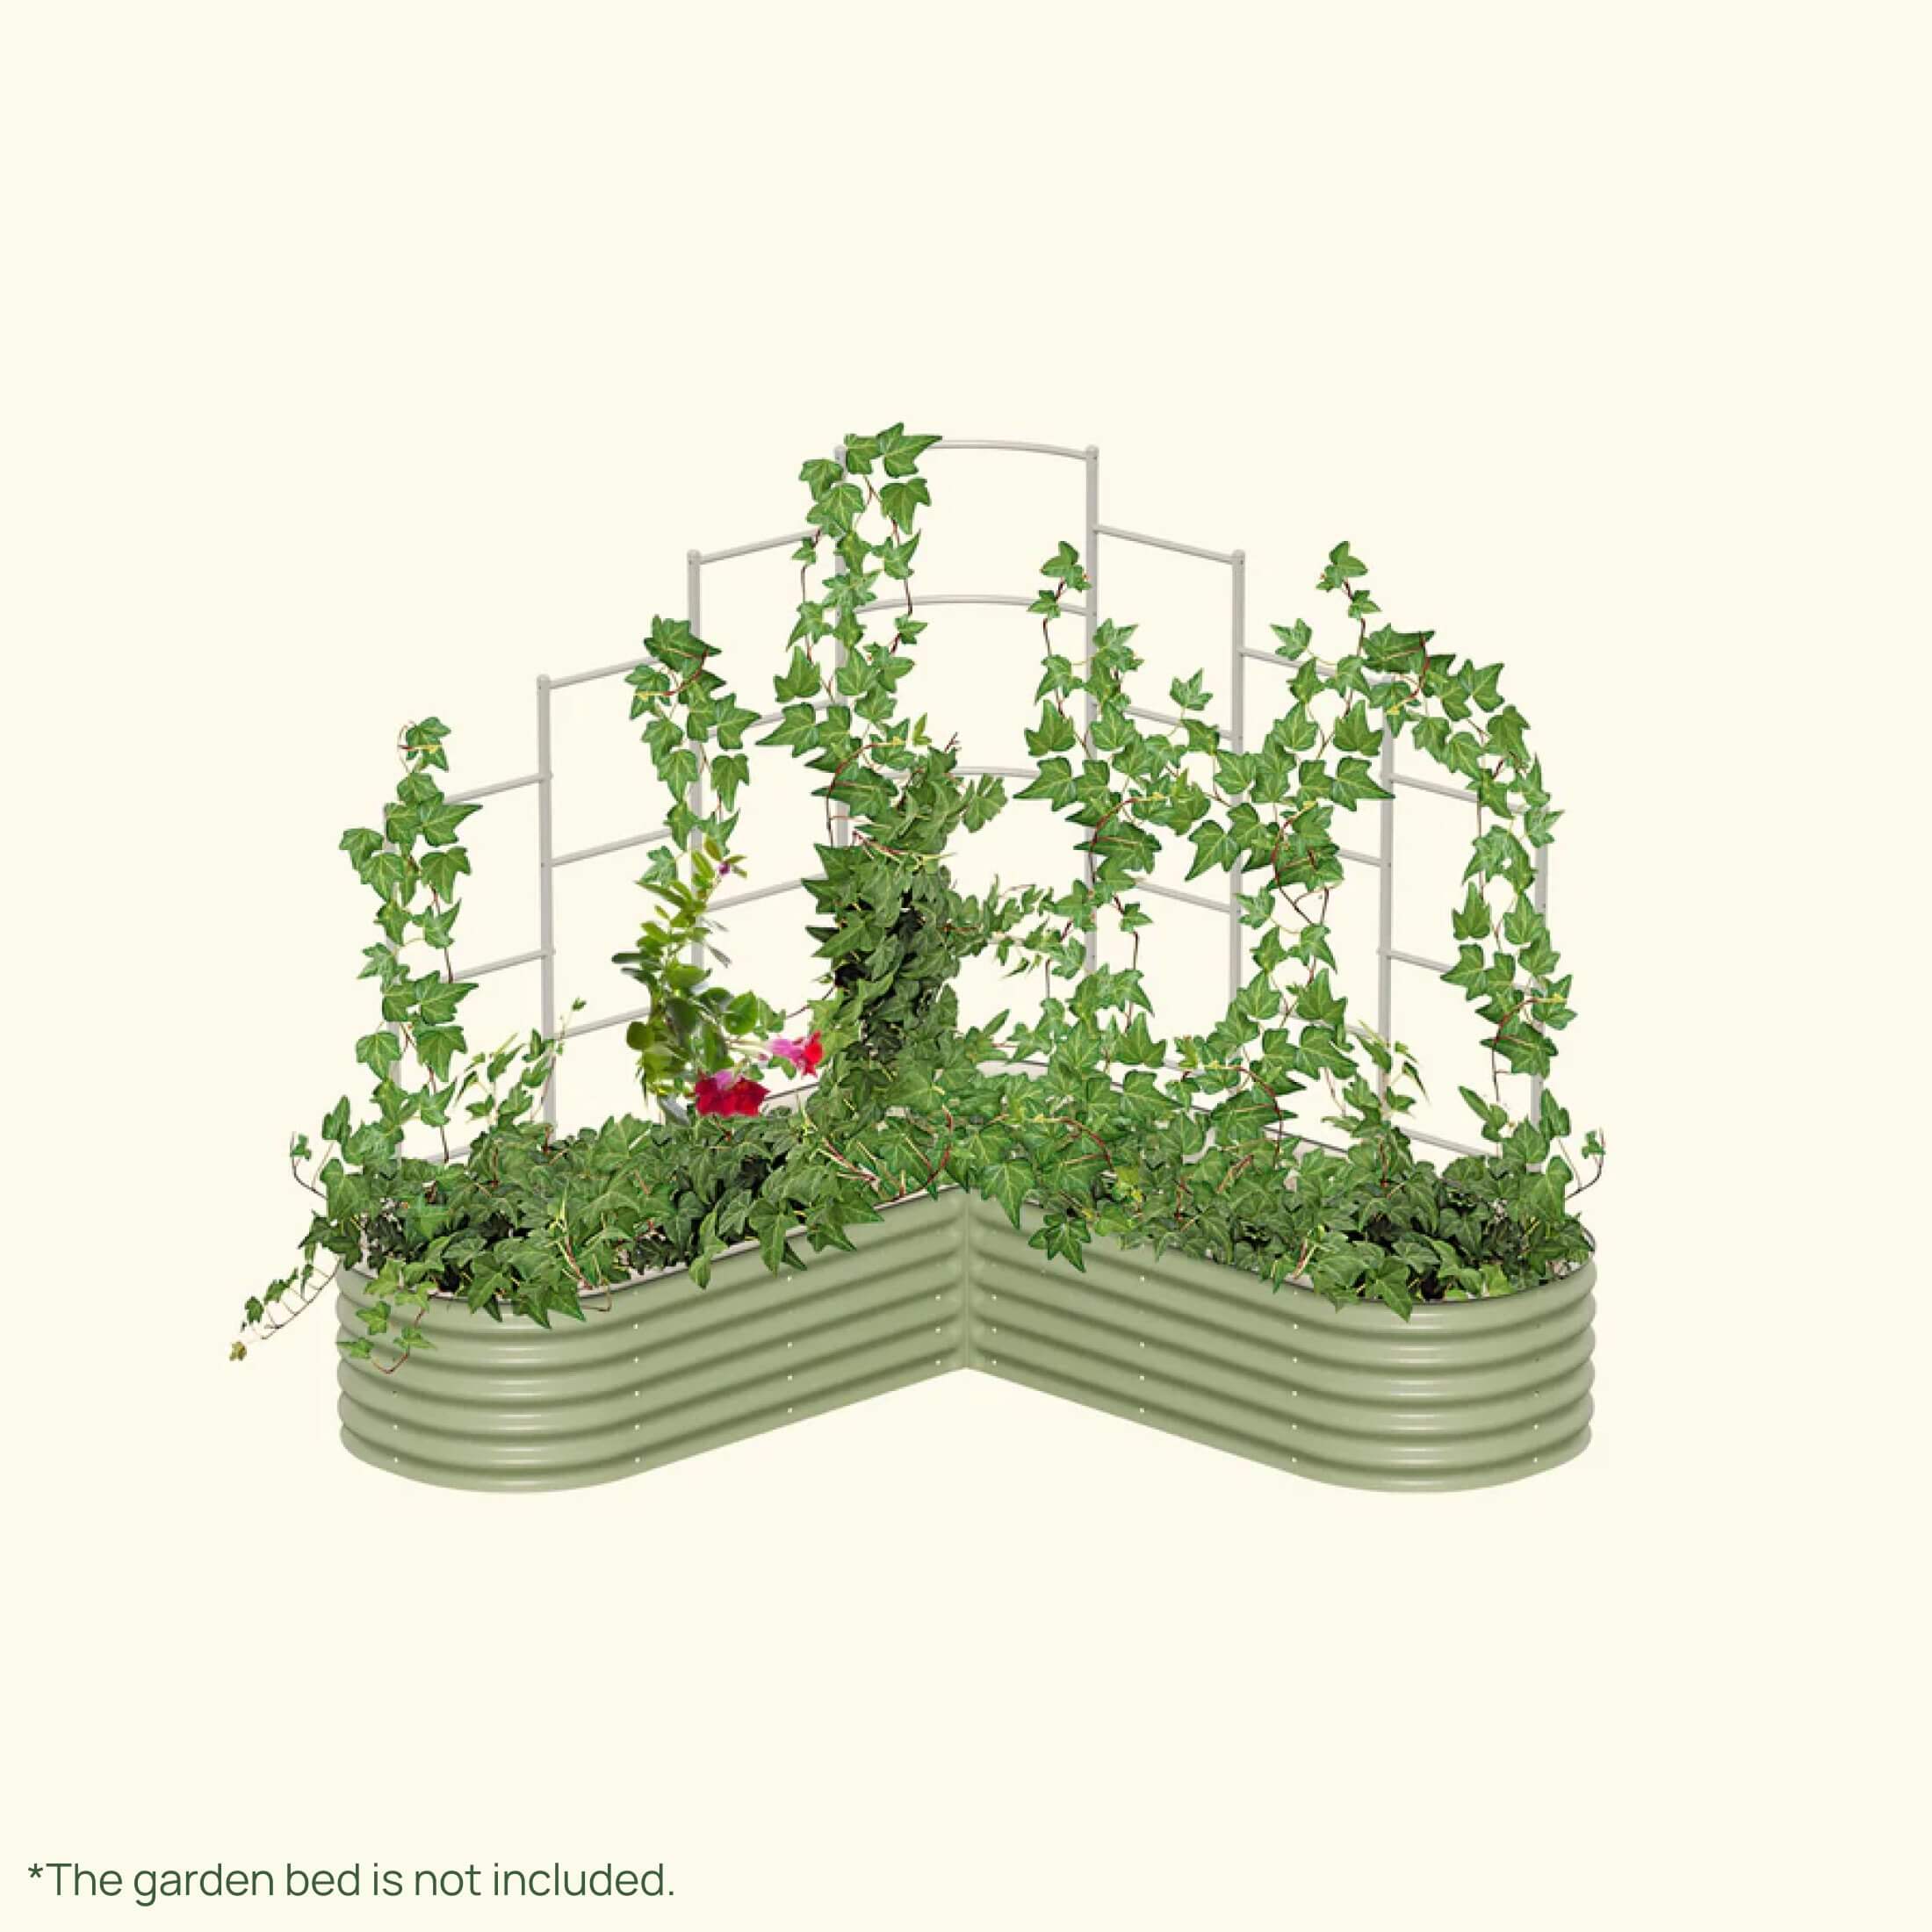 Vego Garden Modular Wall Trellis System - L-Shaped Large Size Garden Beds